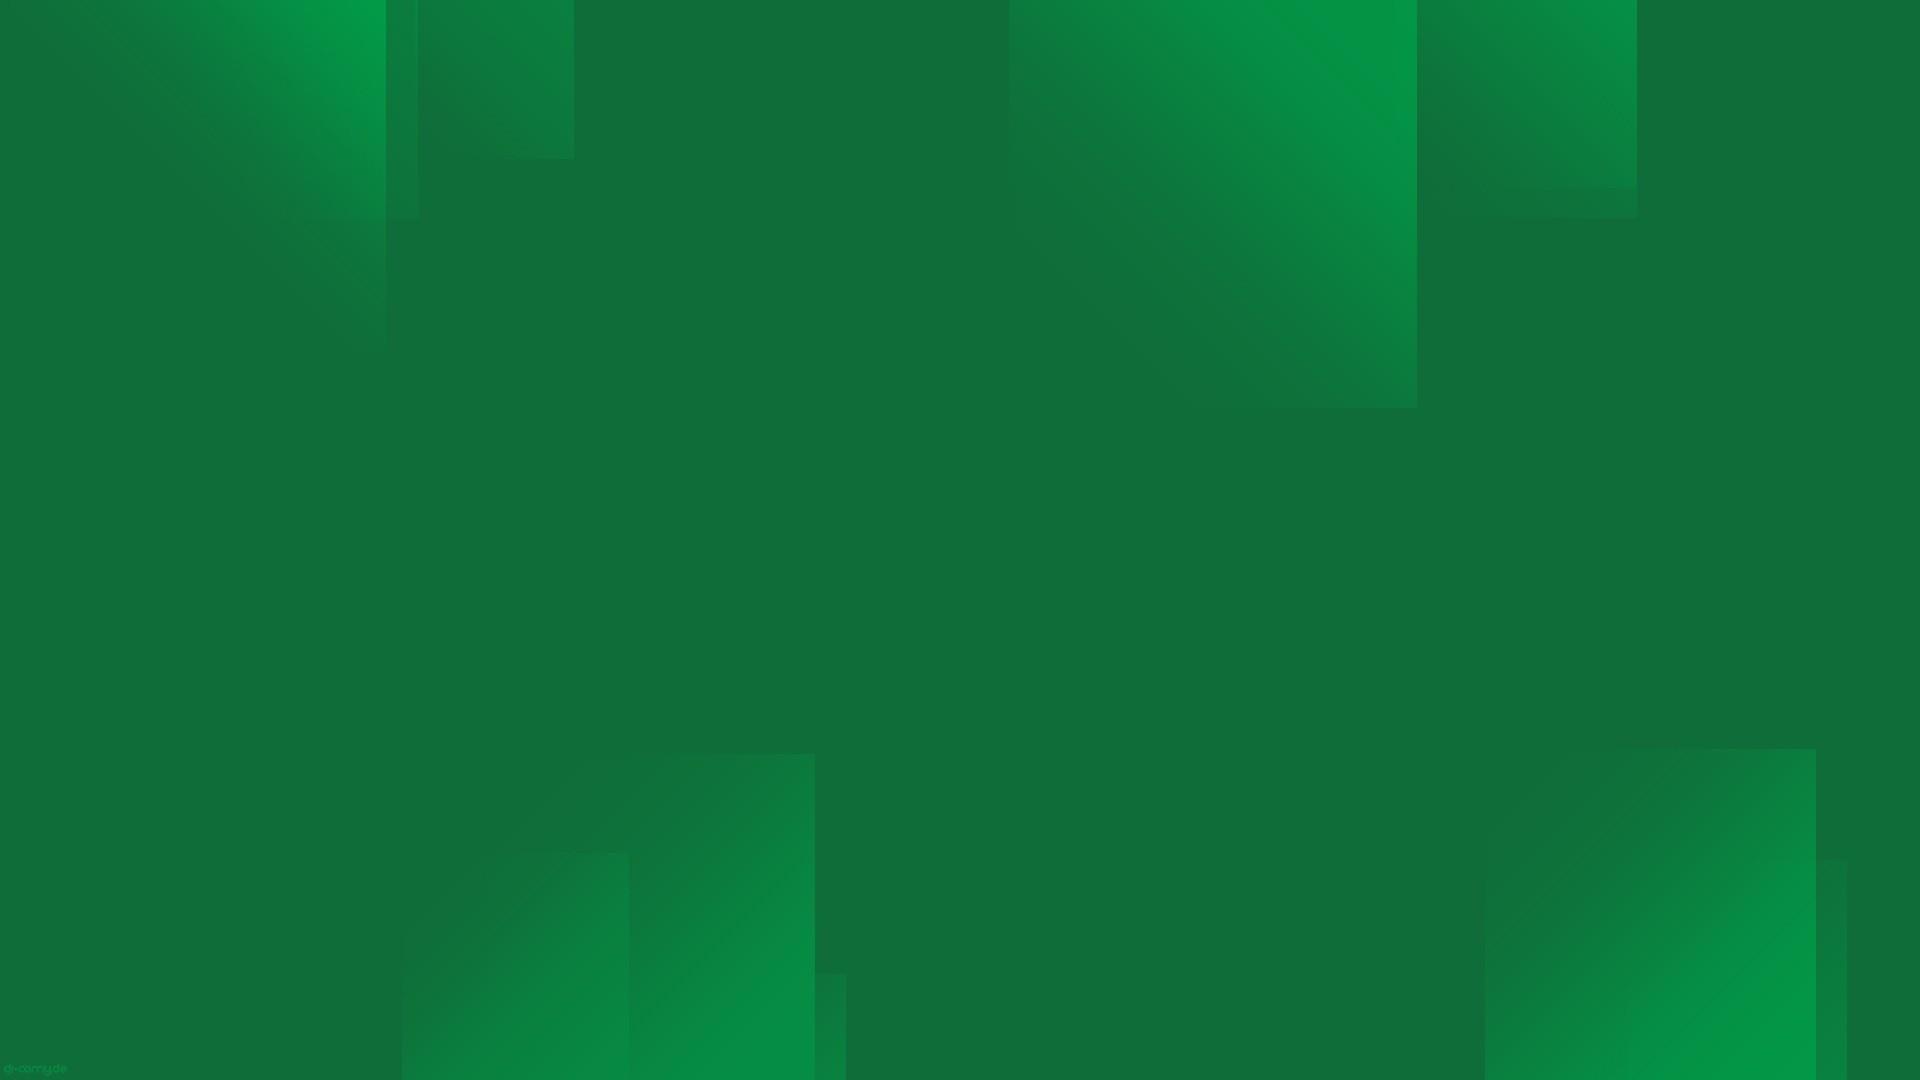 Microsoft metro windows 8 green wallpaper | (50451)